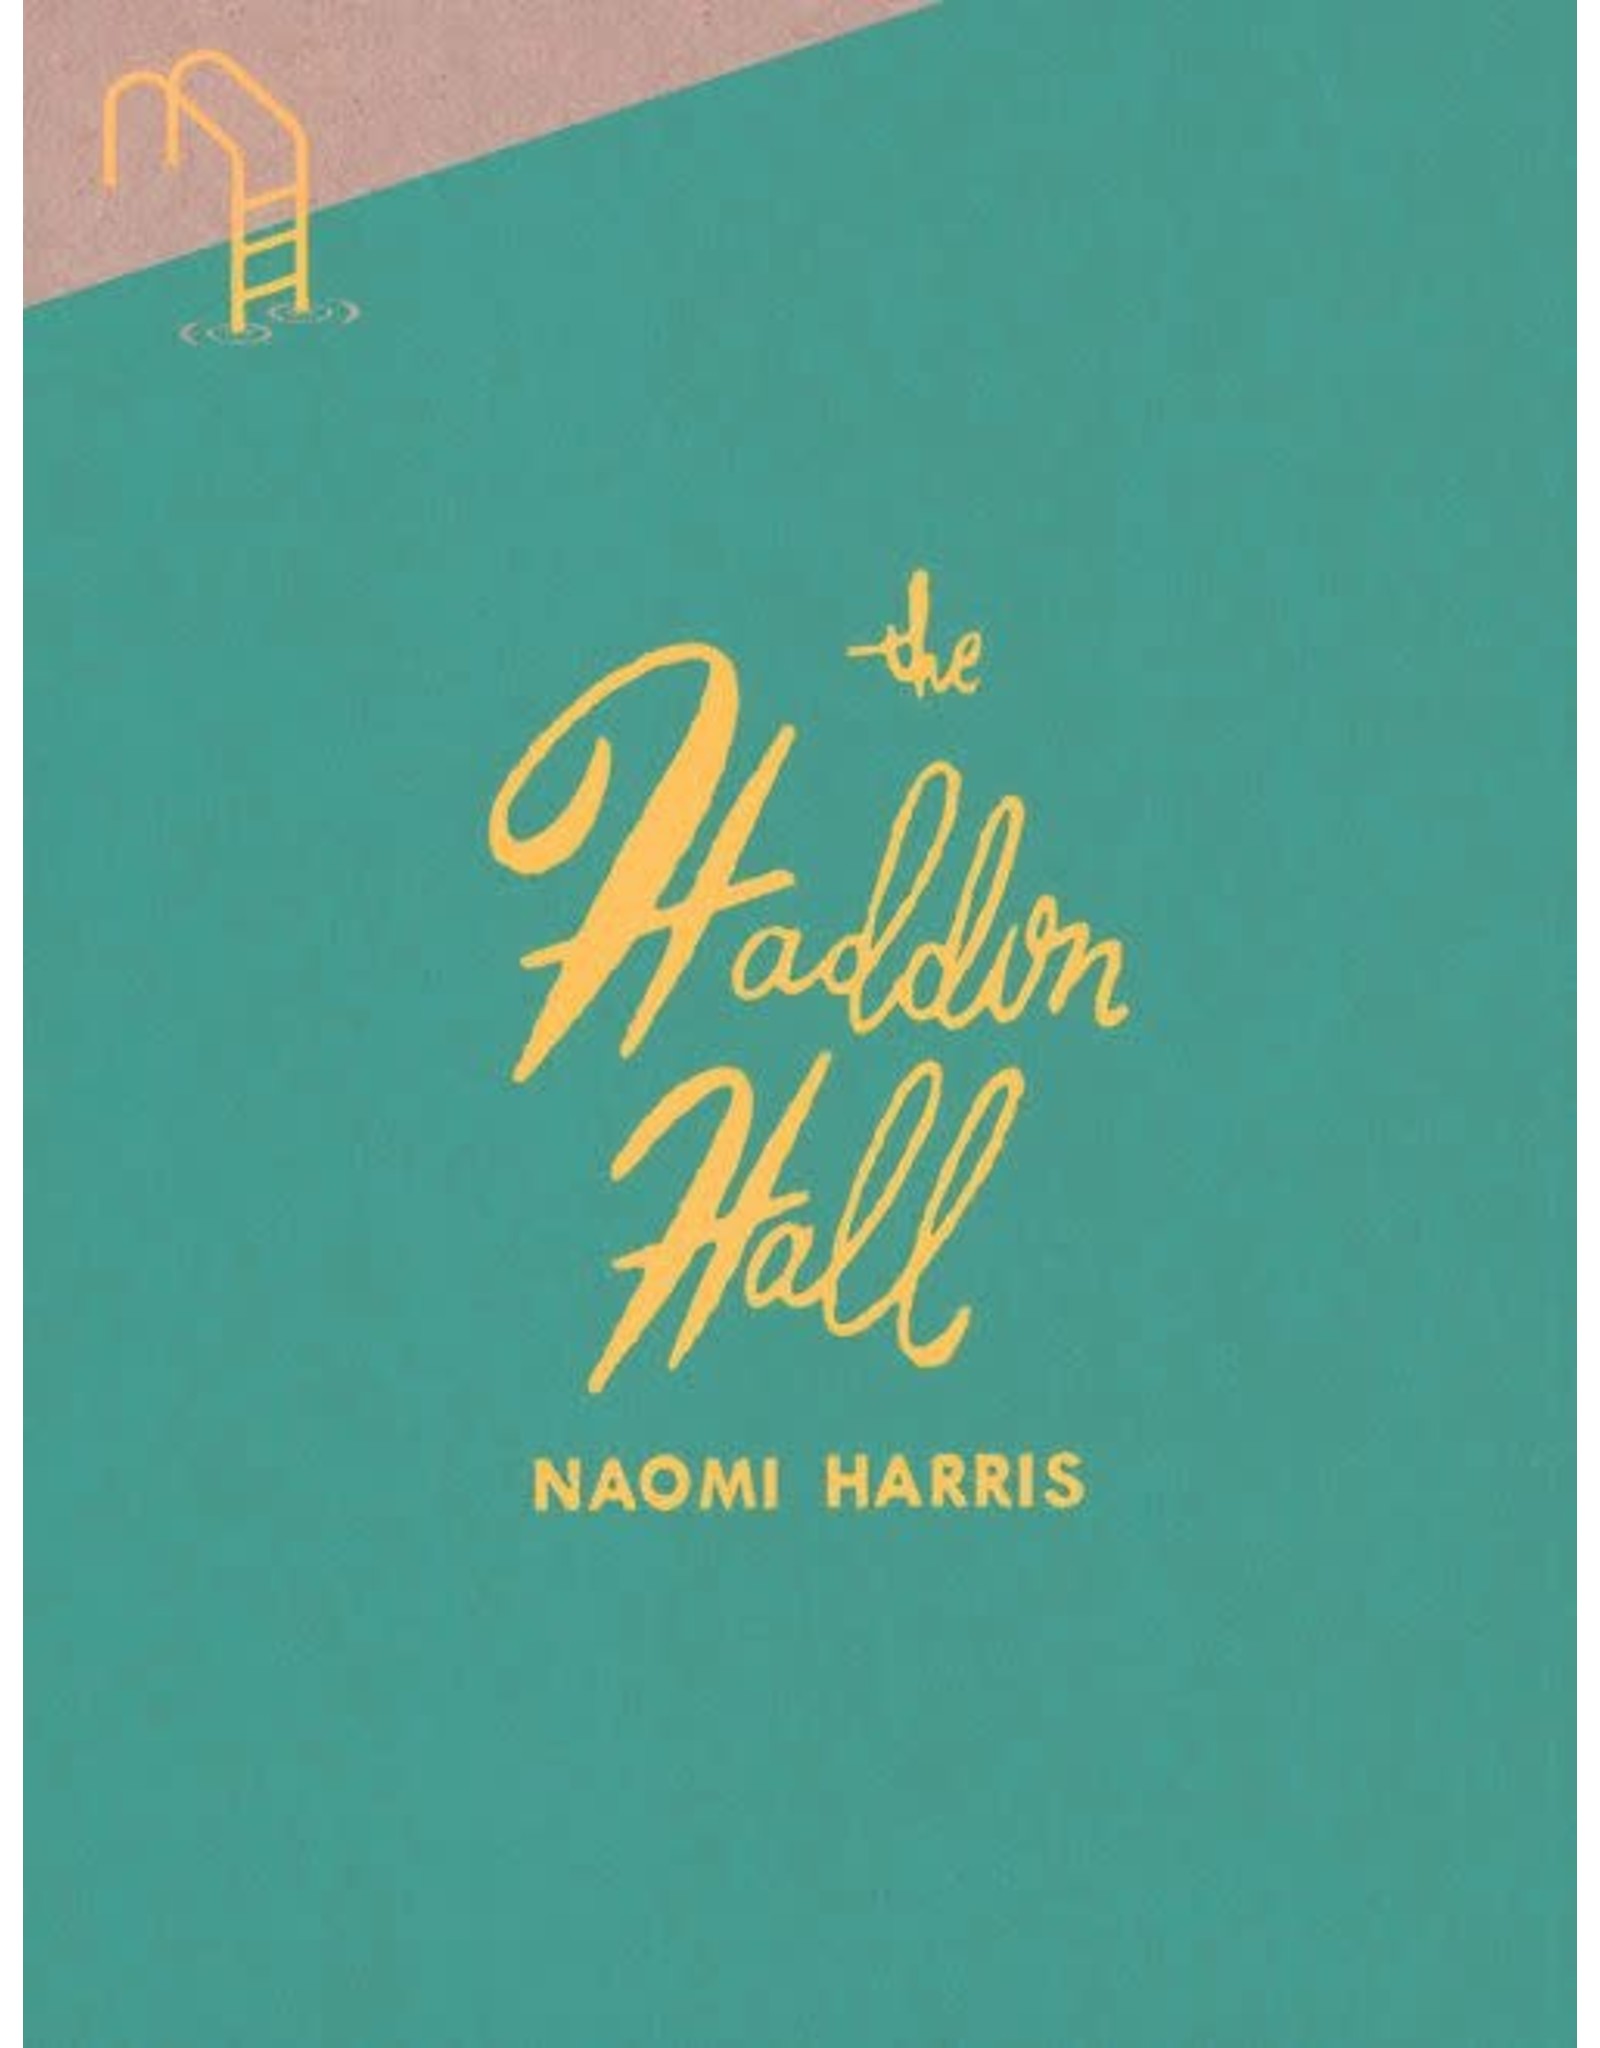 Naomi Harris- Haddon Hall